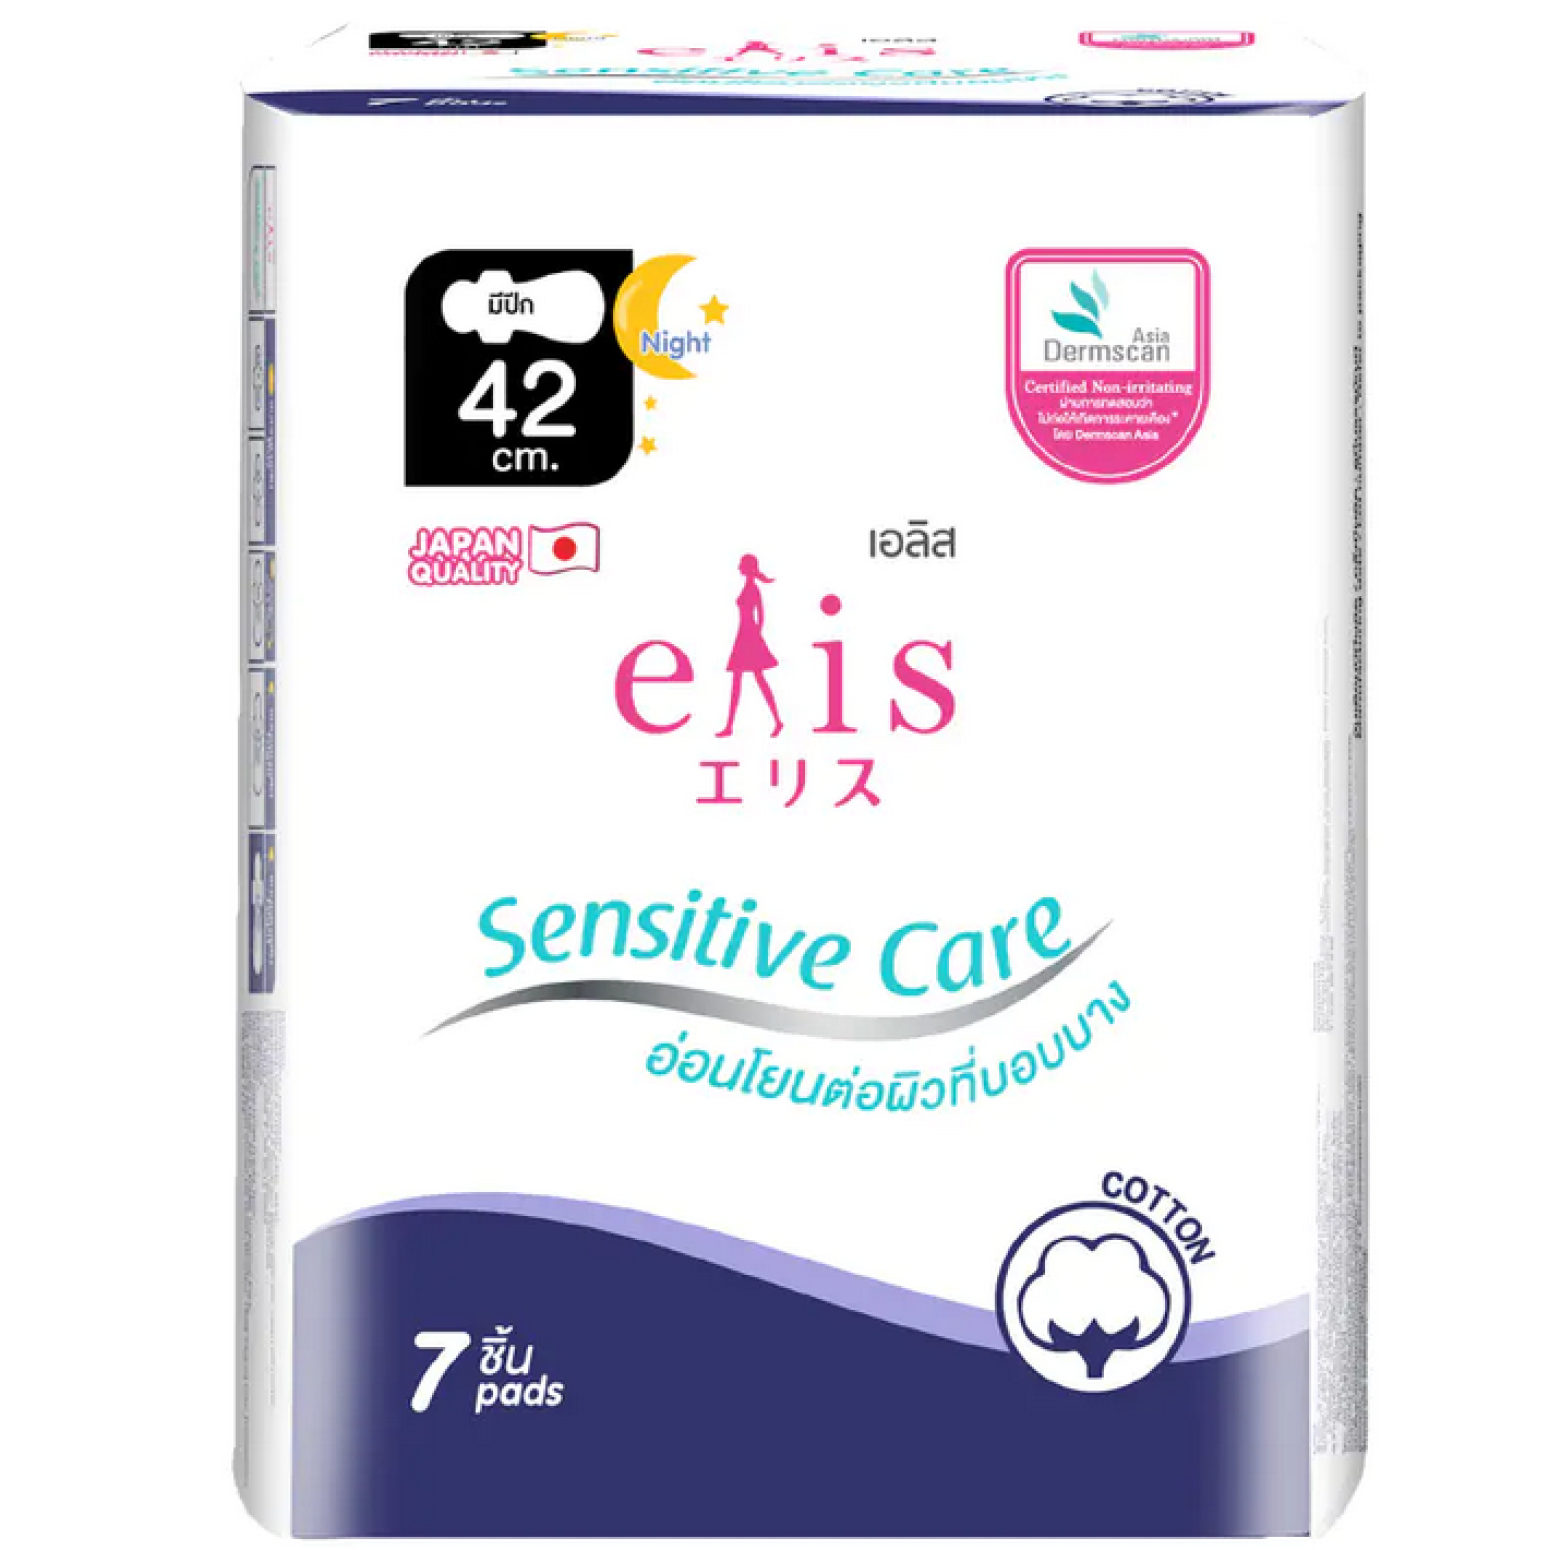 Elis Sensitive Care Sanitary Napkin Wings